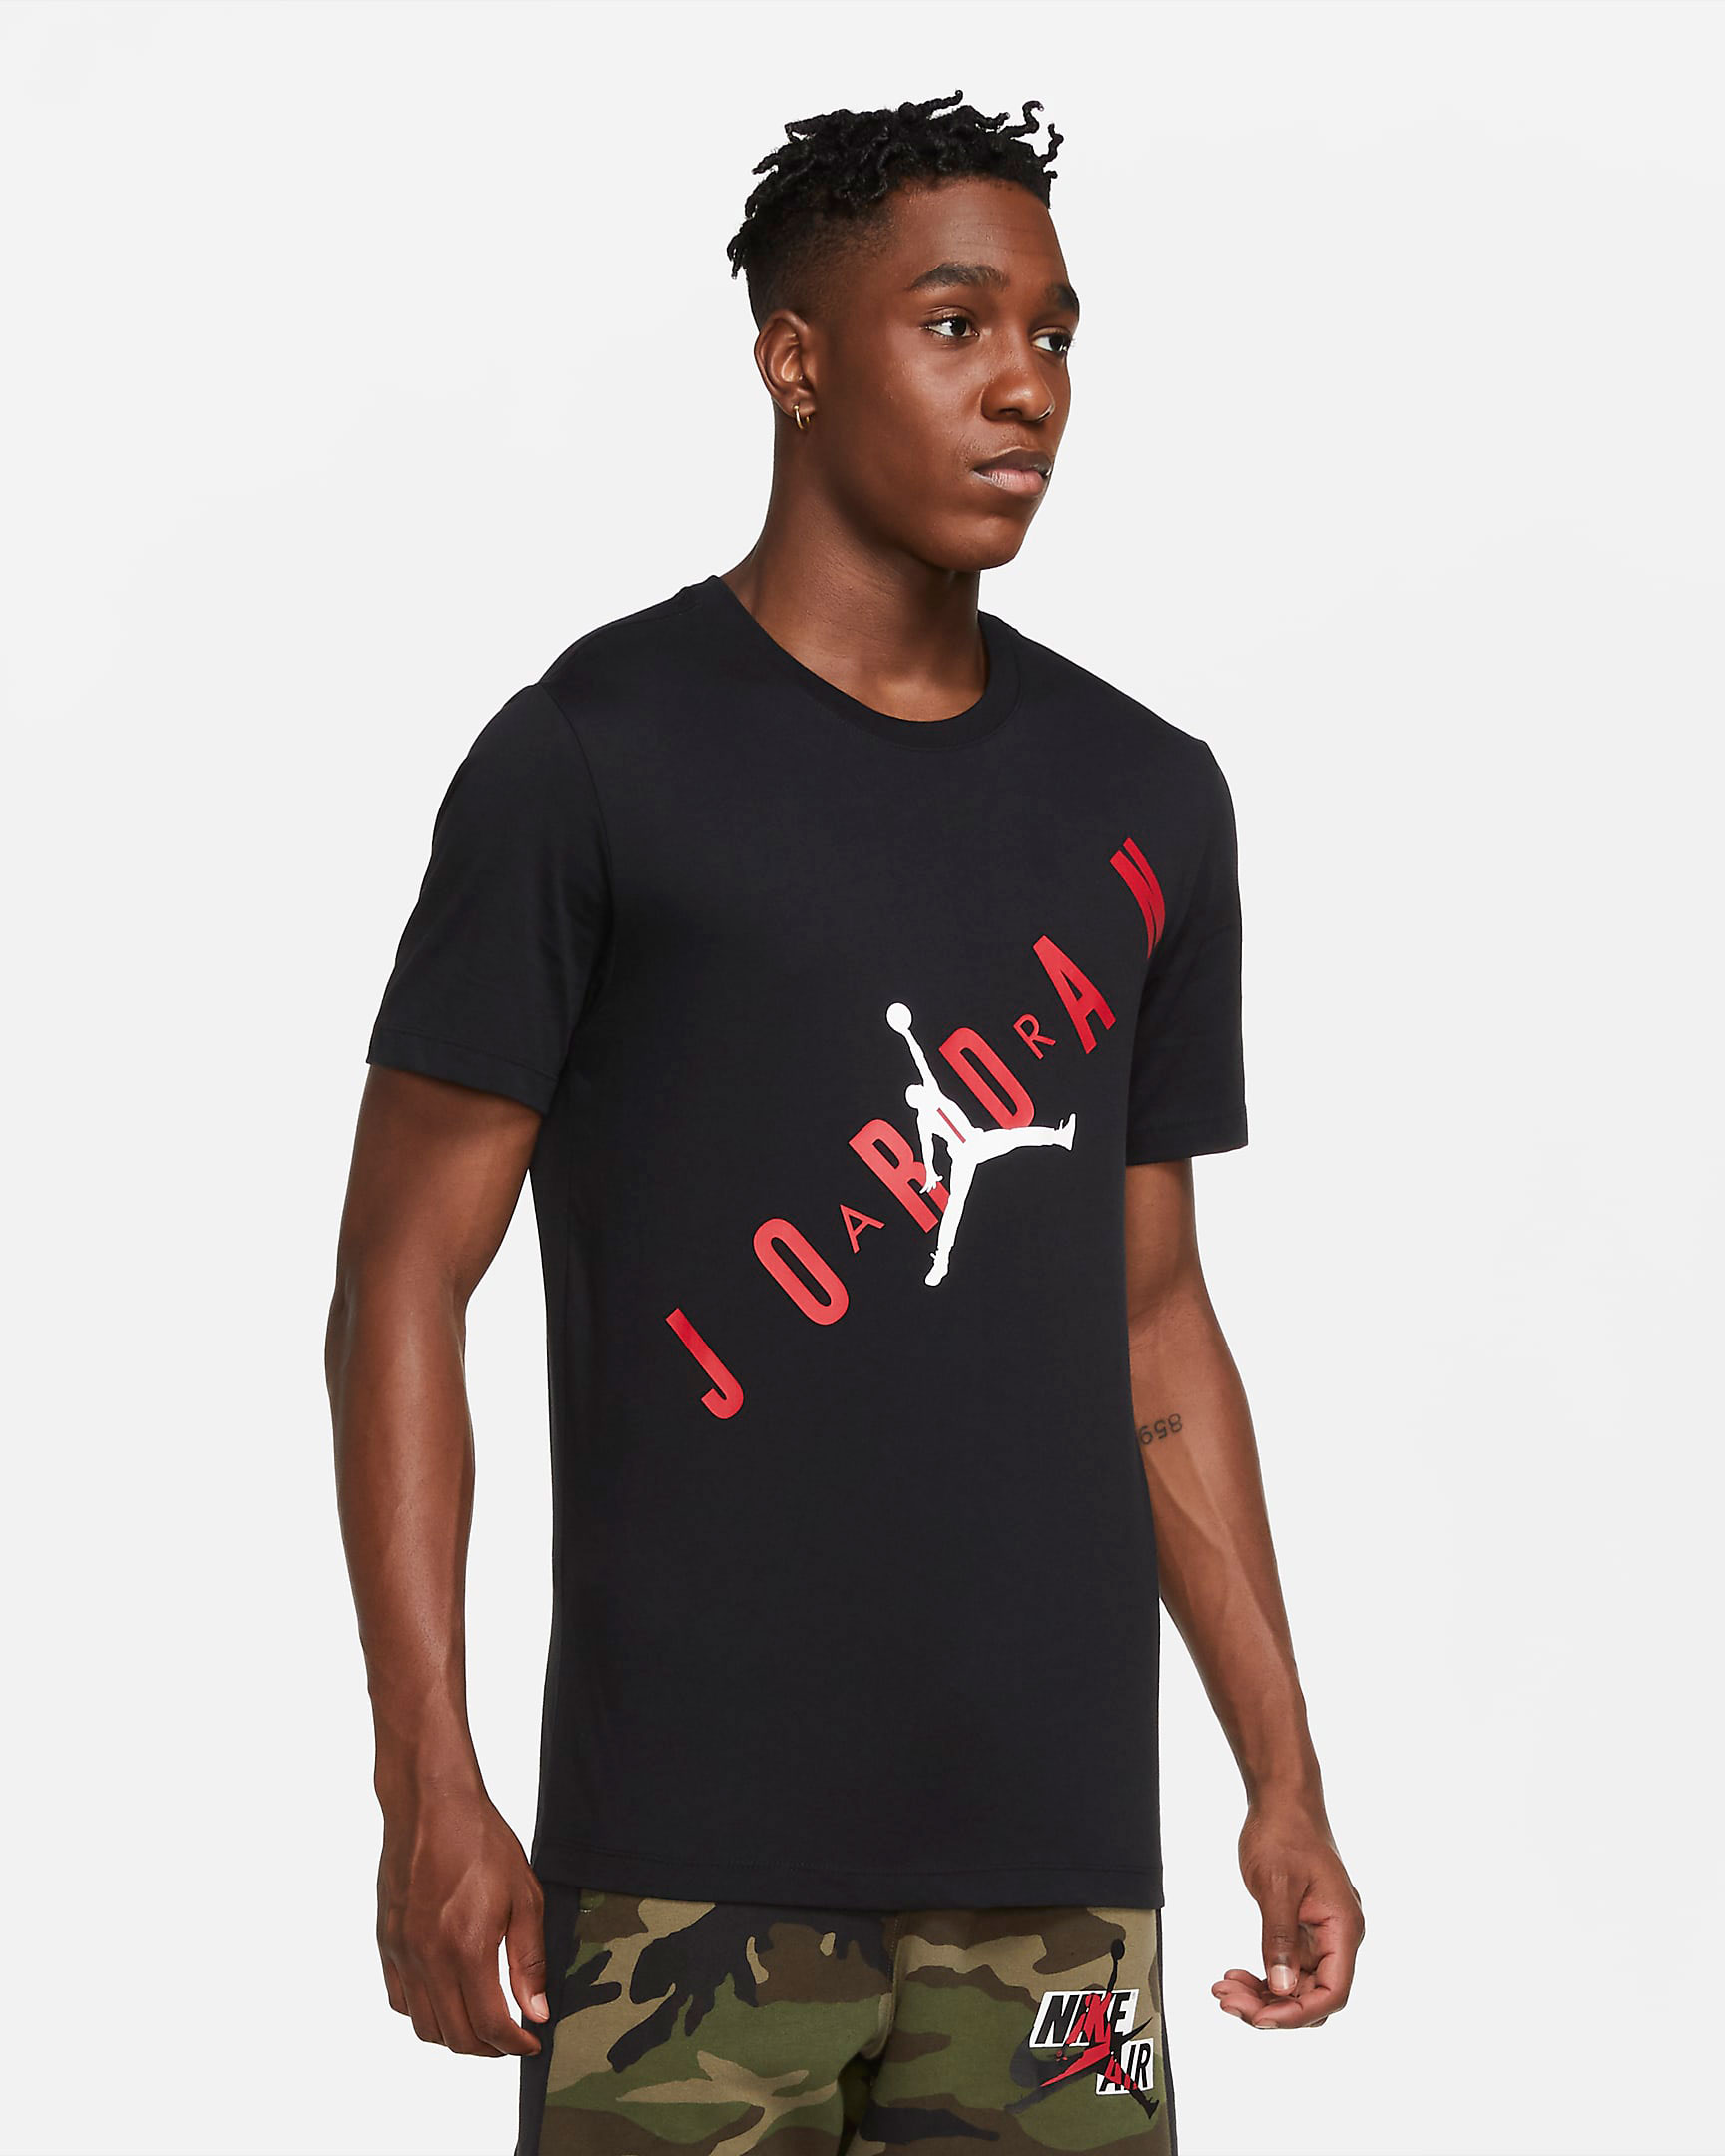 New Jordan Brand Apparel for Fall 2020 | SneakerFits.com